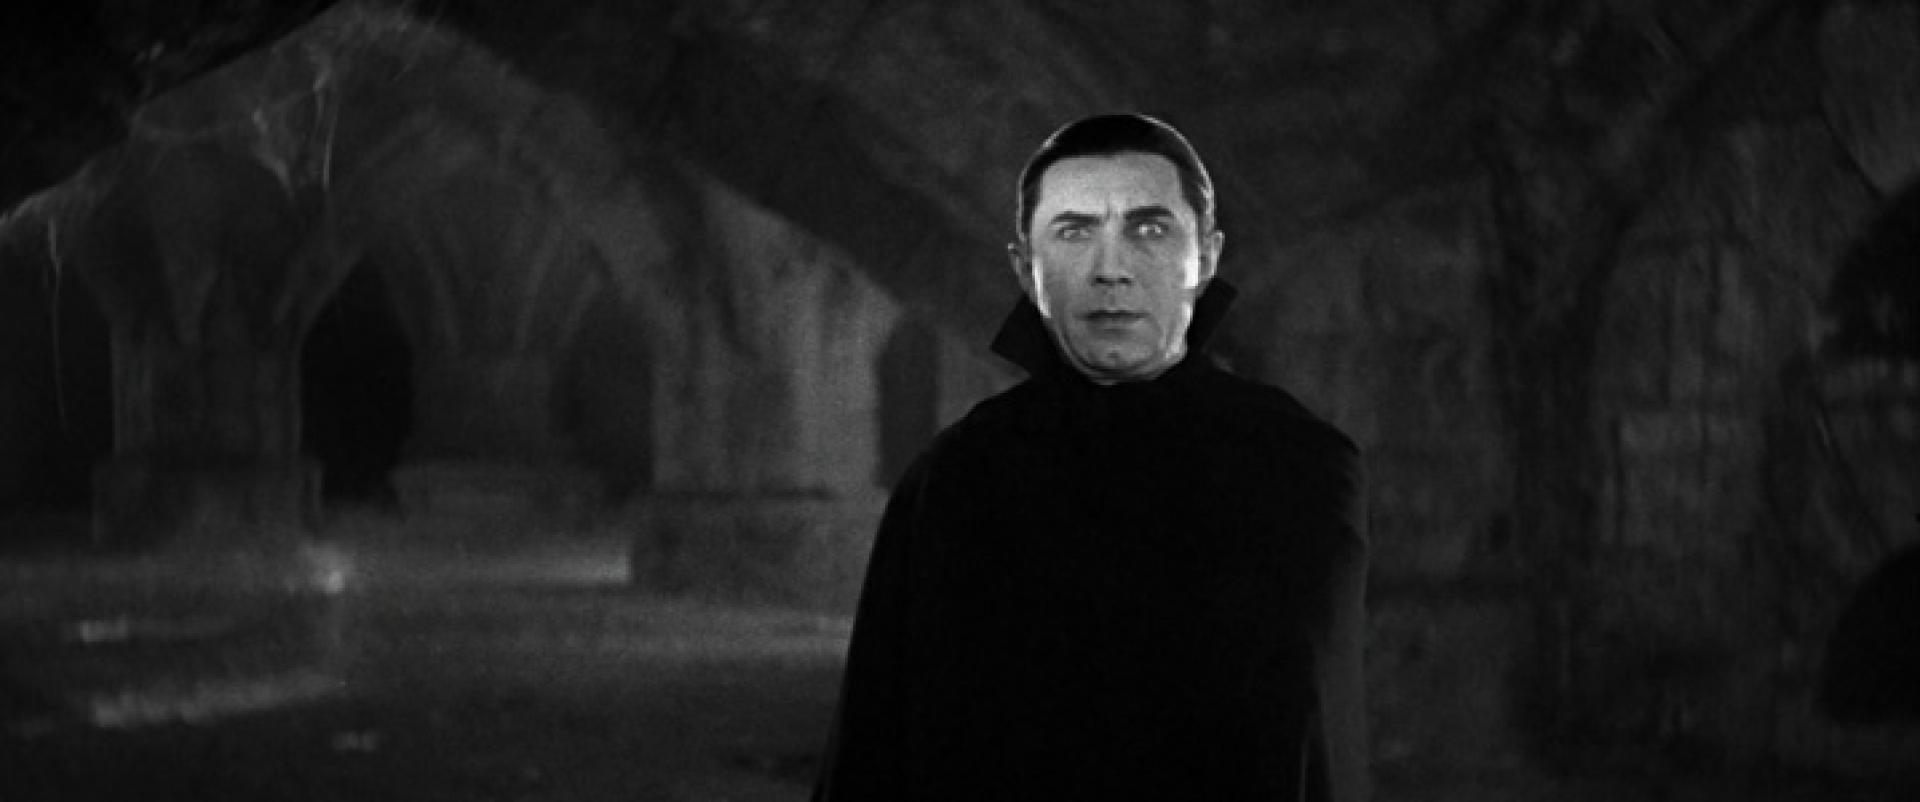 Drakula (1931)